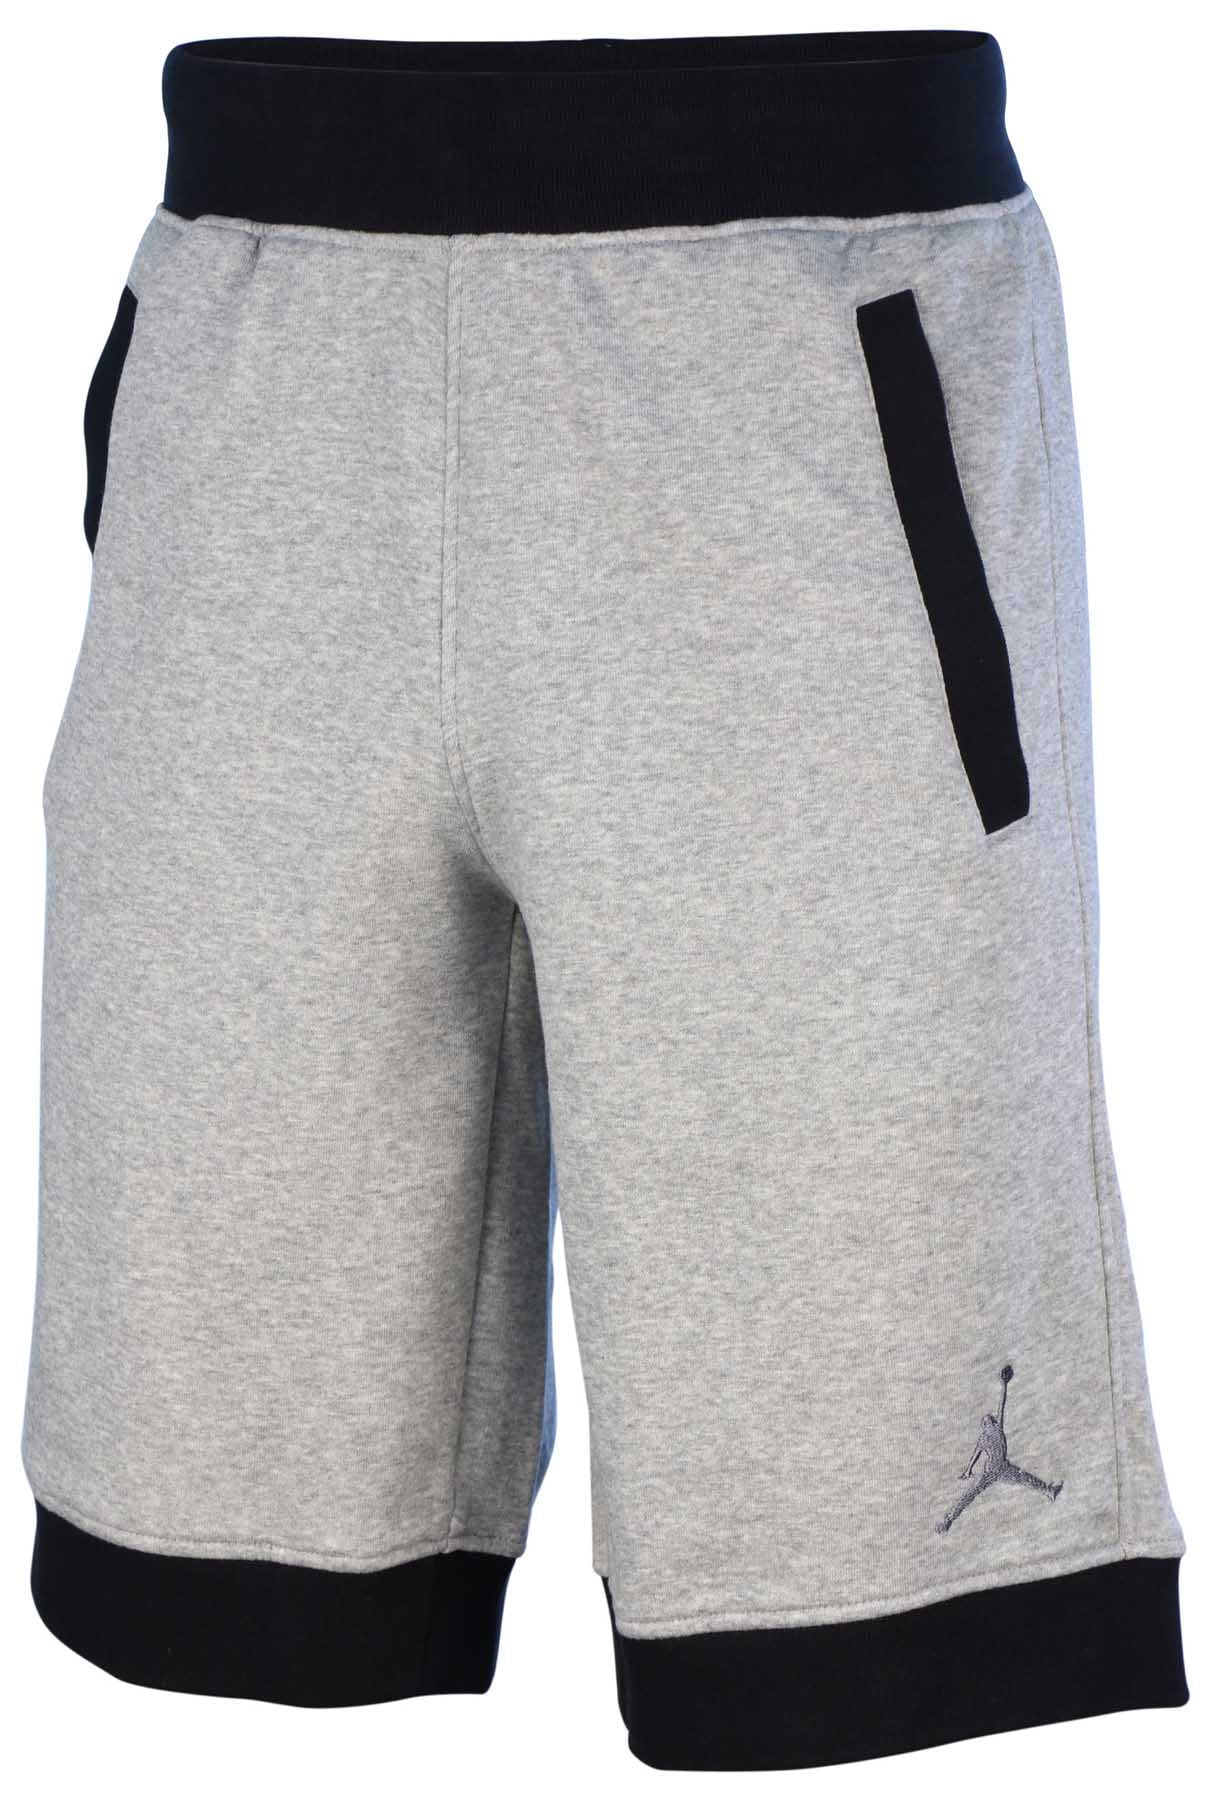 Jordan Men's Nike Jordan Fleece Shorts - Walmart.com